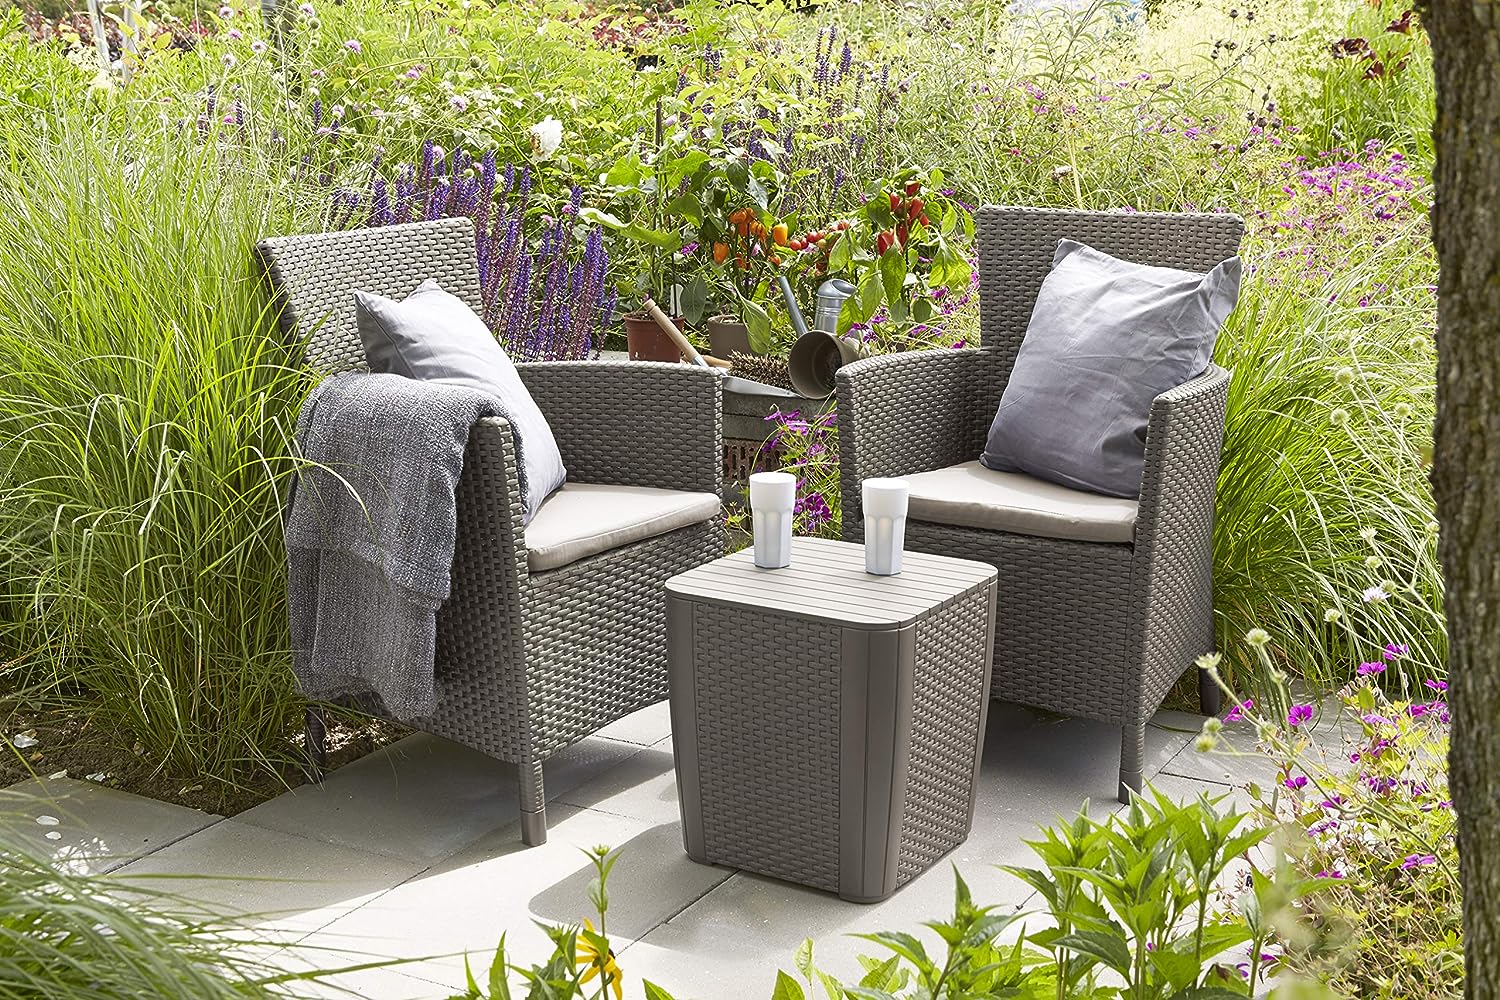 Keter Iowa Garden Furniture Balcony Set, Cappuccino with Sand Cushions,247855